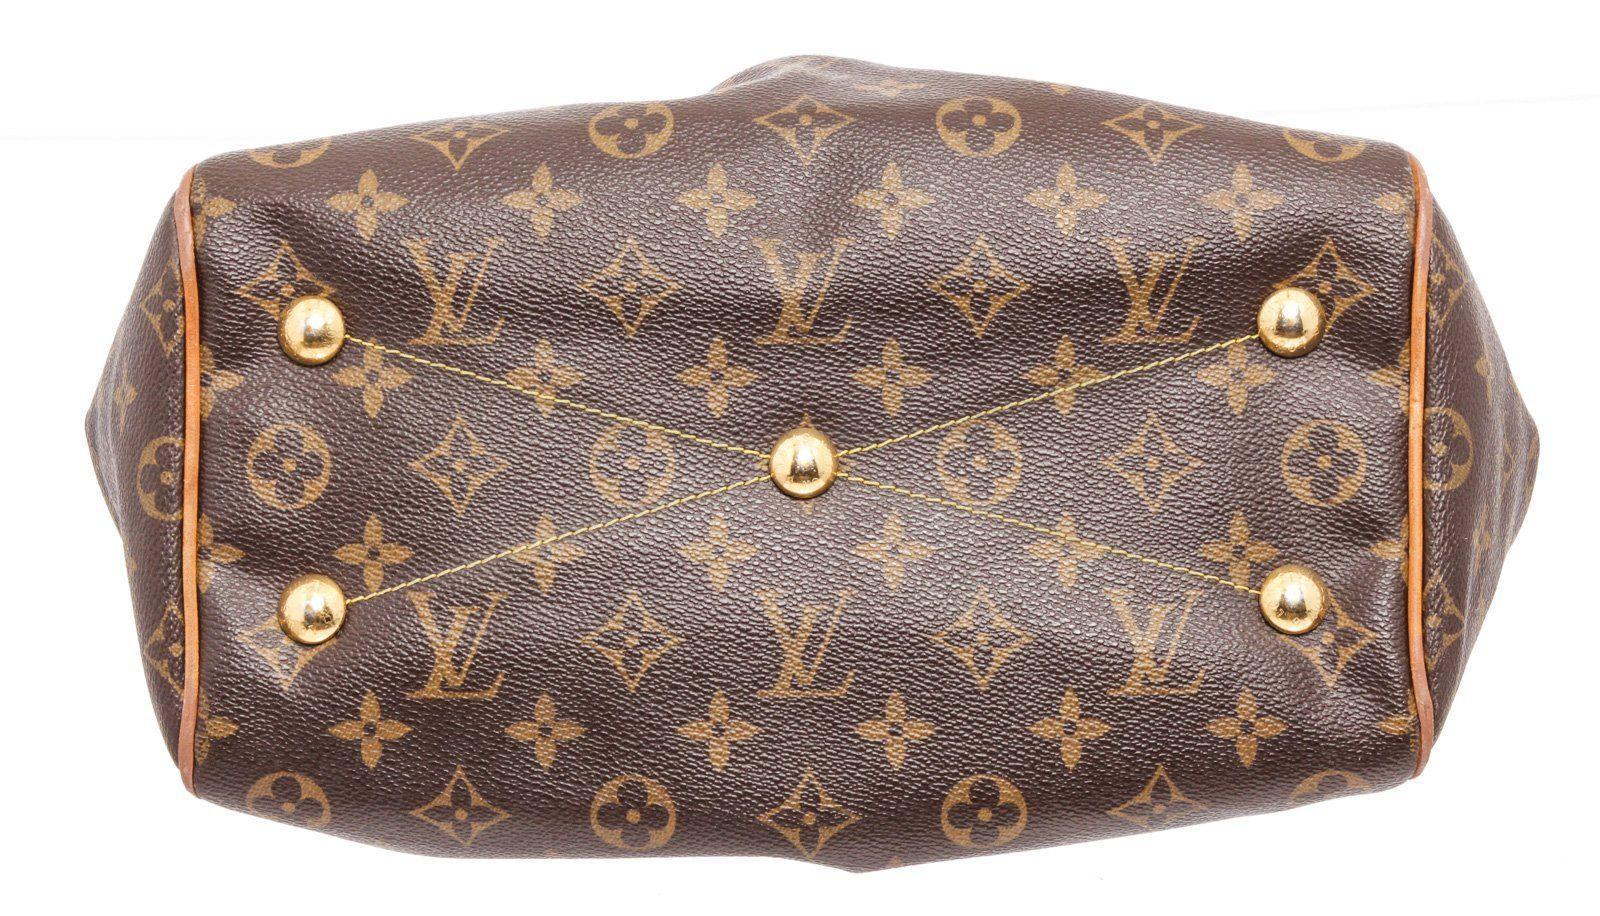 Women's Louis Vuitton Brown Monogram Tivoli PM Satchel Bag with gold-tone hardware